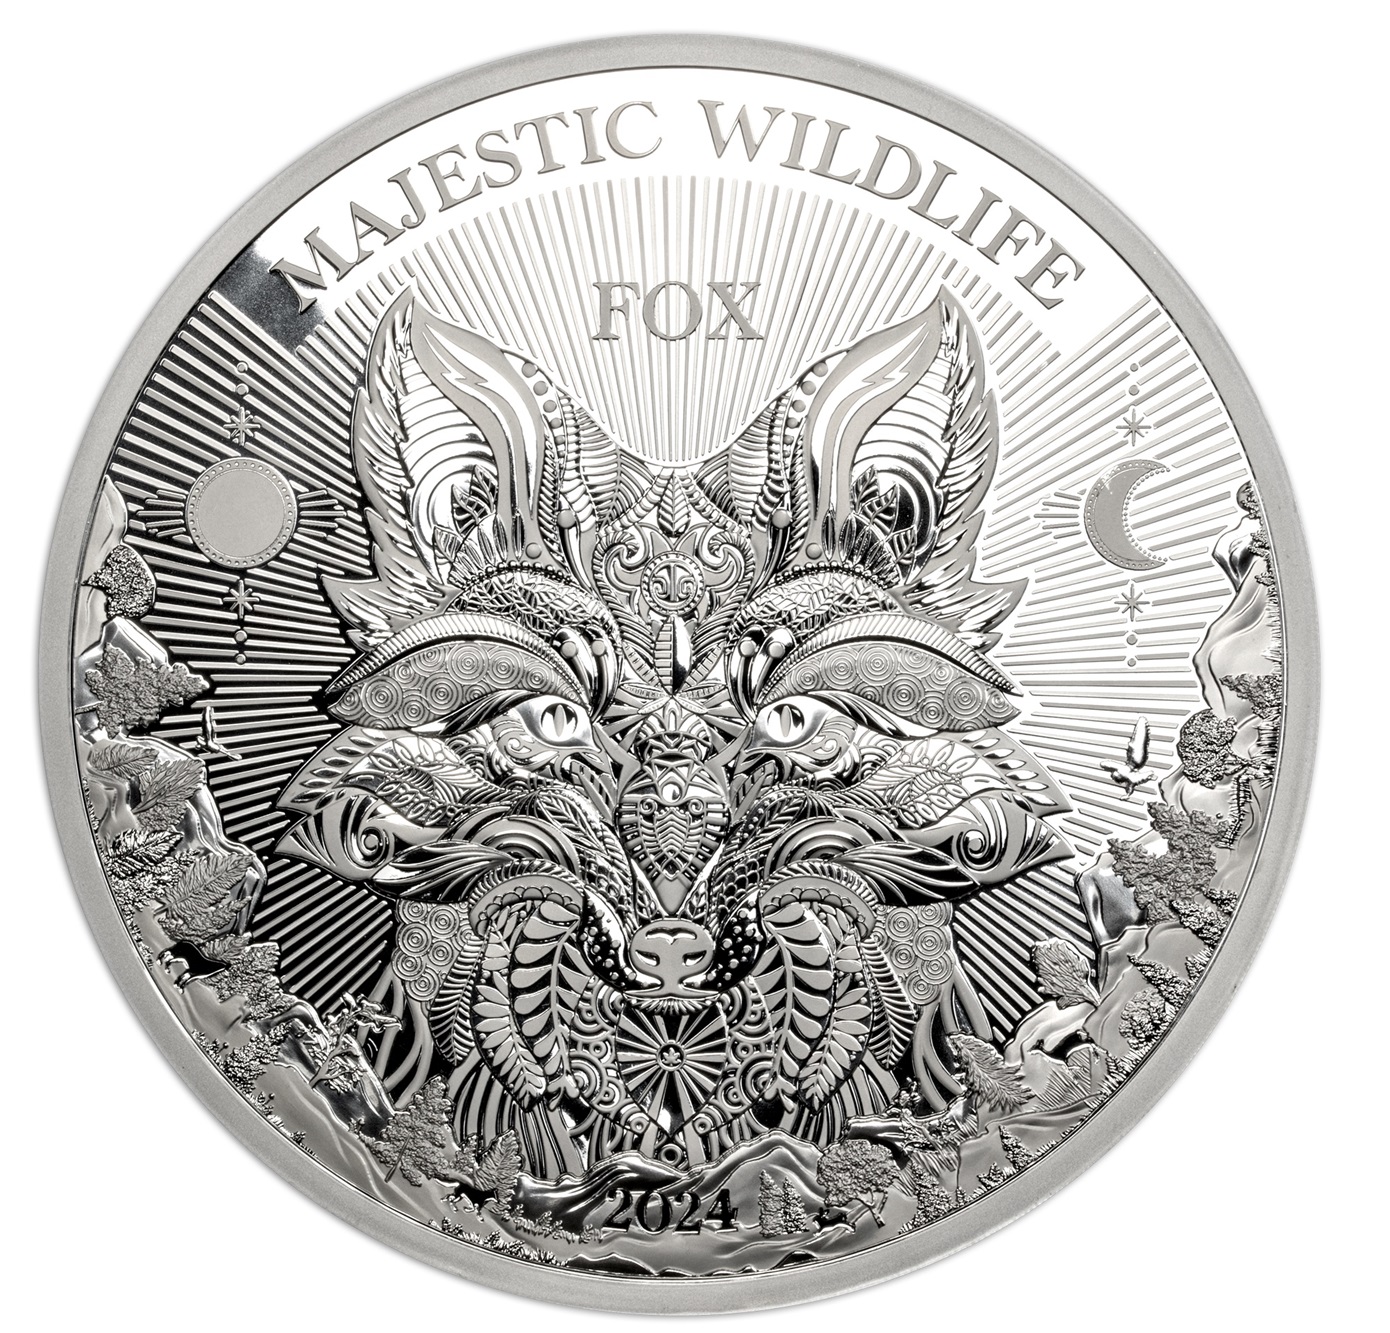 (W193.1.25.D.2024.1.kg.Ag.1550910111) 25 Dollars Samoa 2024 1 kilogram Proof silver - Fox Reverse (zoom)